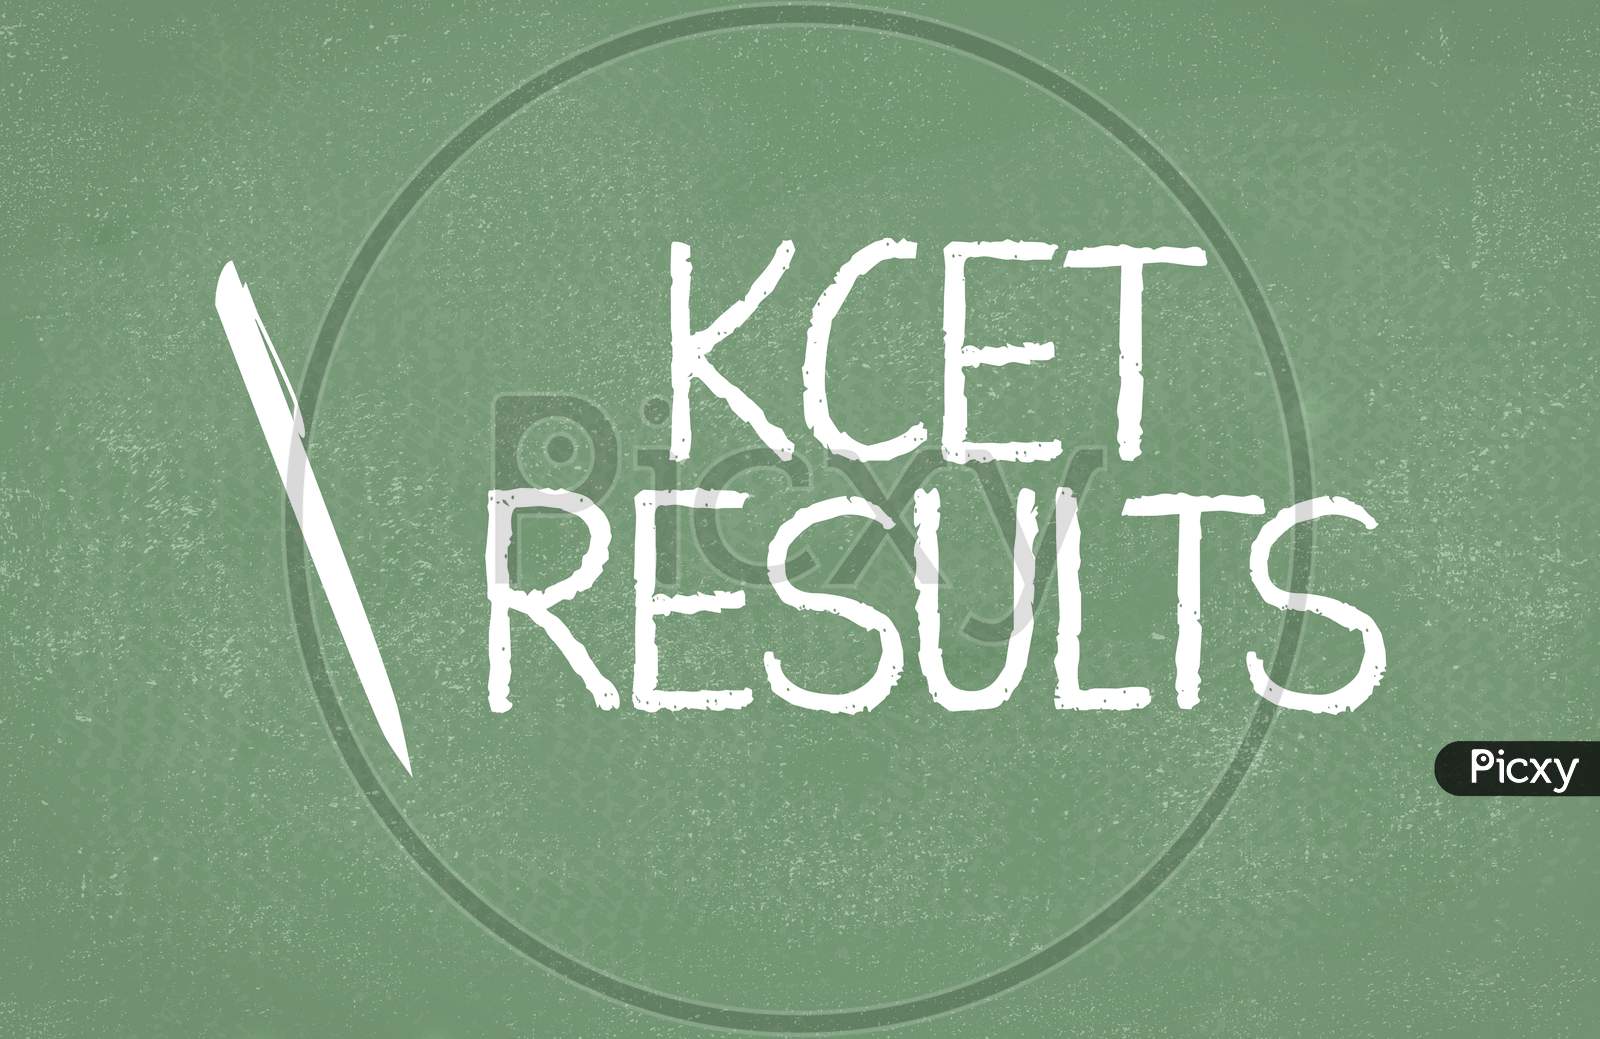 Kcet Or Karnataka Common Entrance Test Results Written On Green Board.